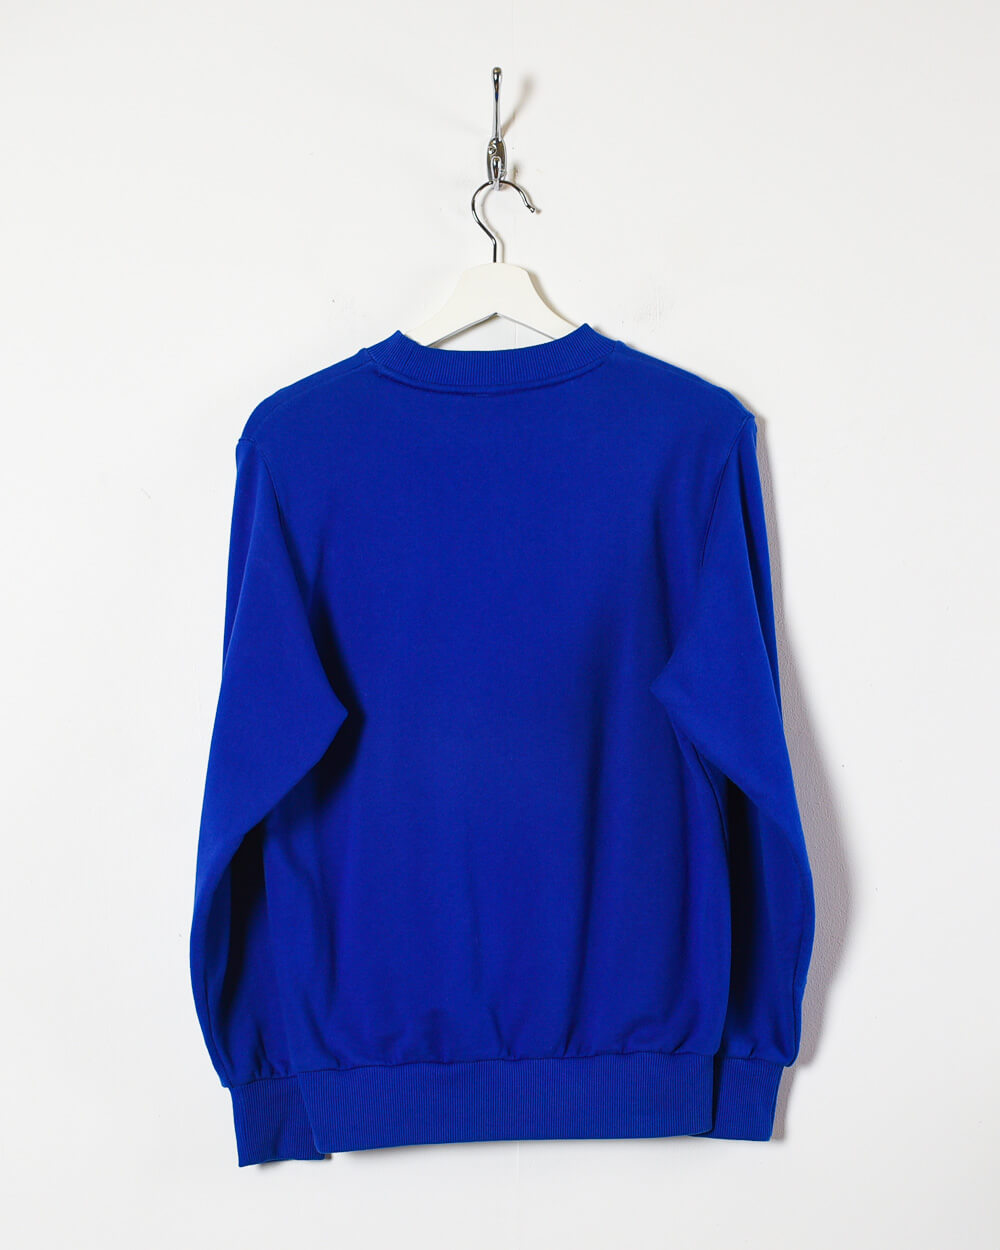 Blue Umbro Chelsea Sweatshirt - Small